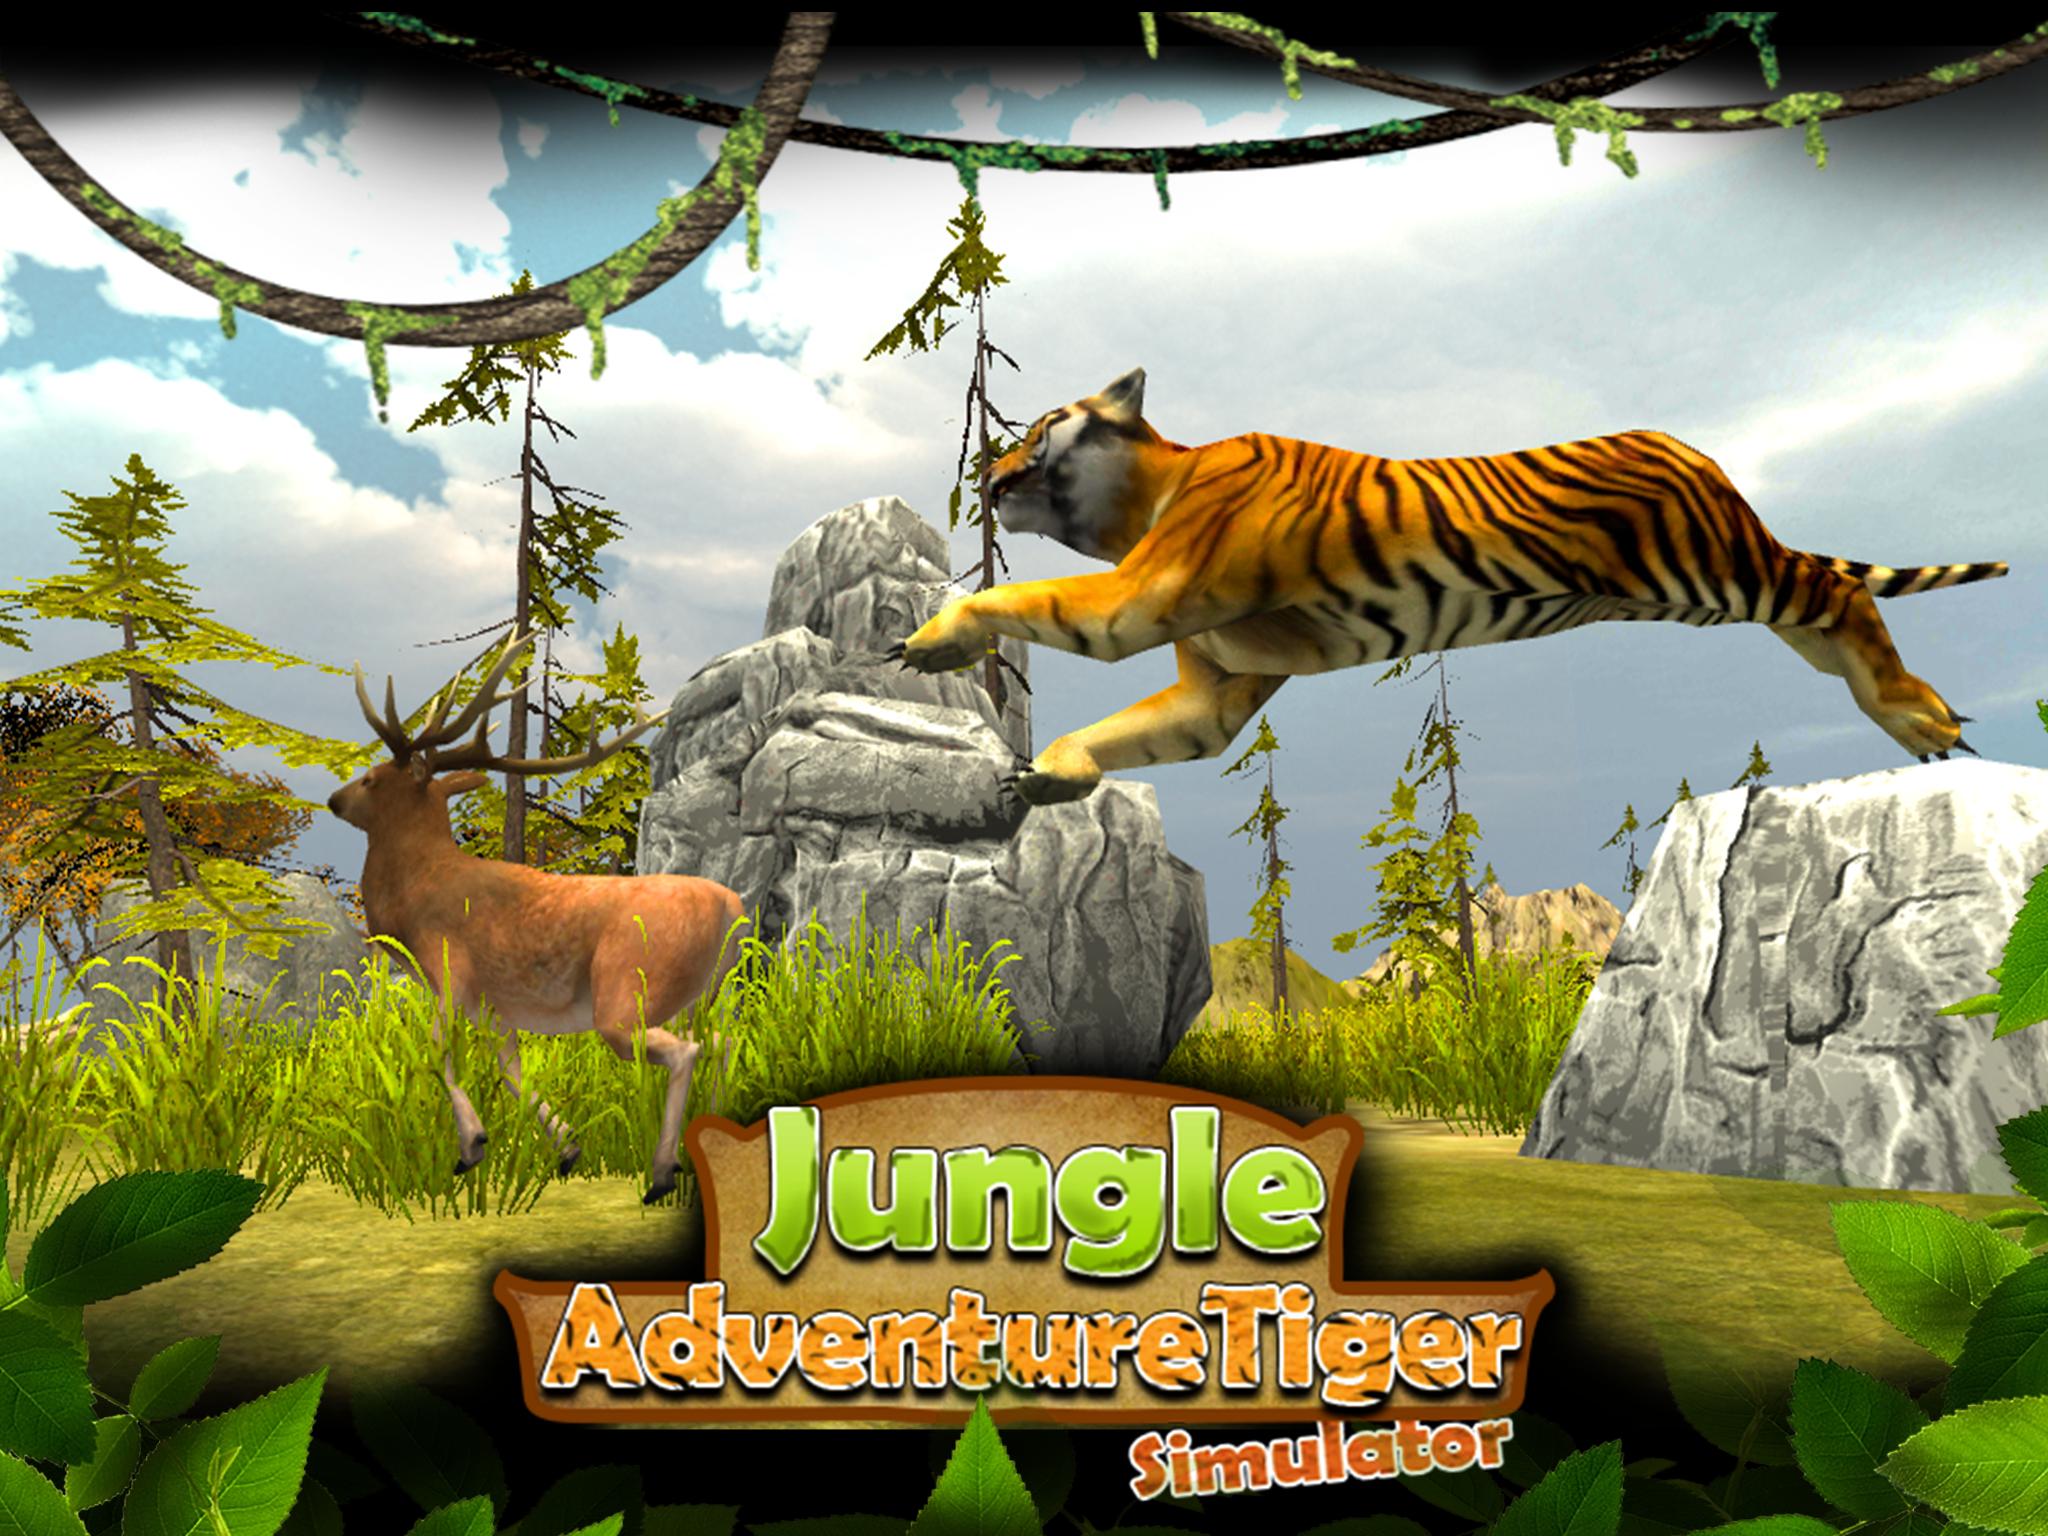 Игра про джунгли. Джунгли Адвентурес 3. Jungle игра. Звери джунглей игра. Игра про джунгли с животными.